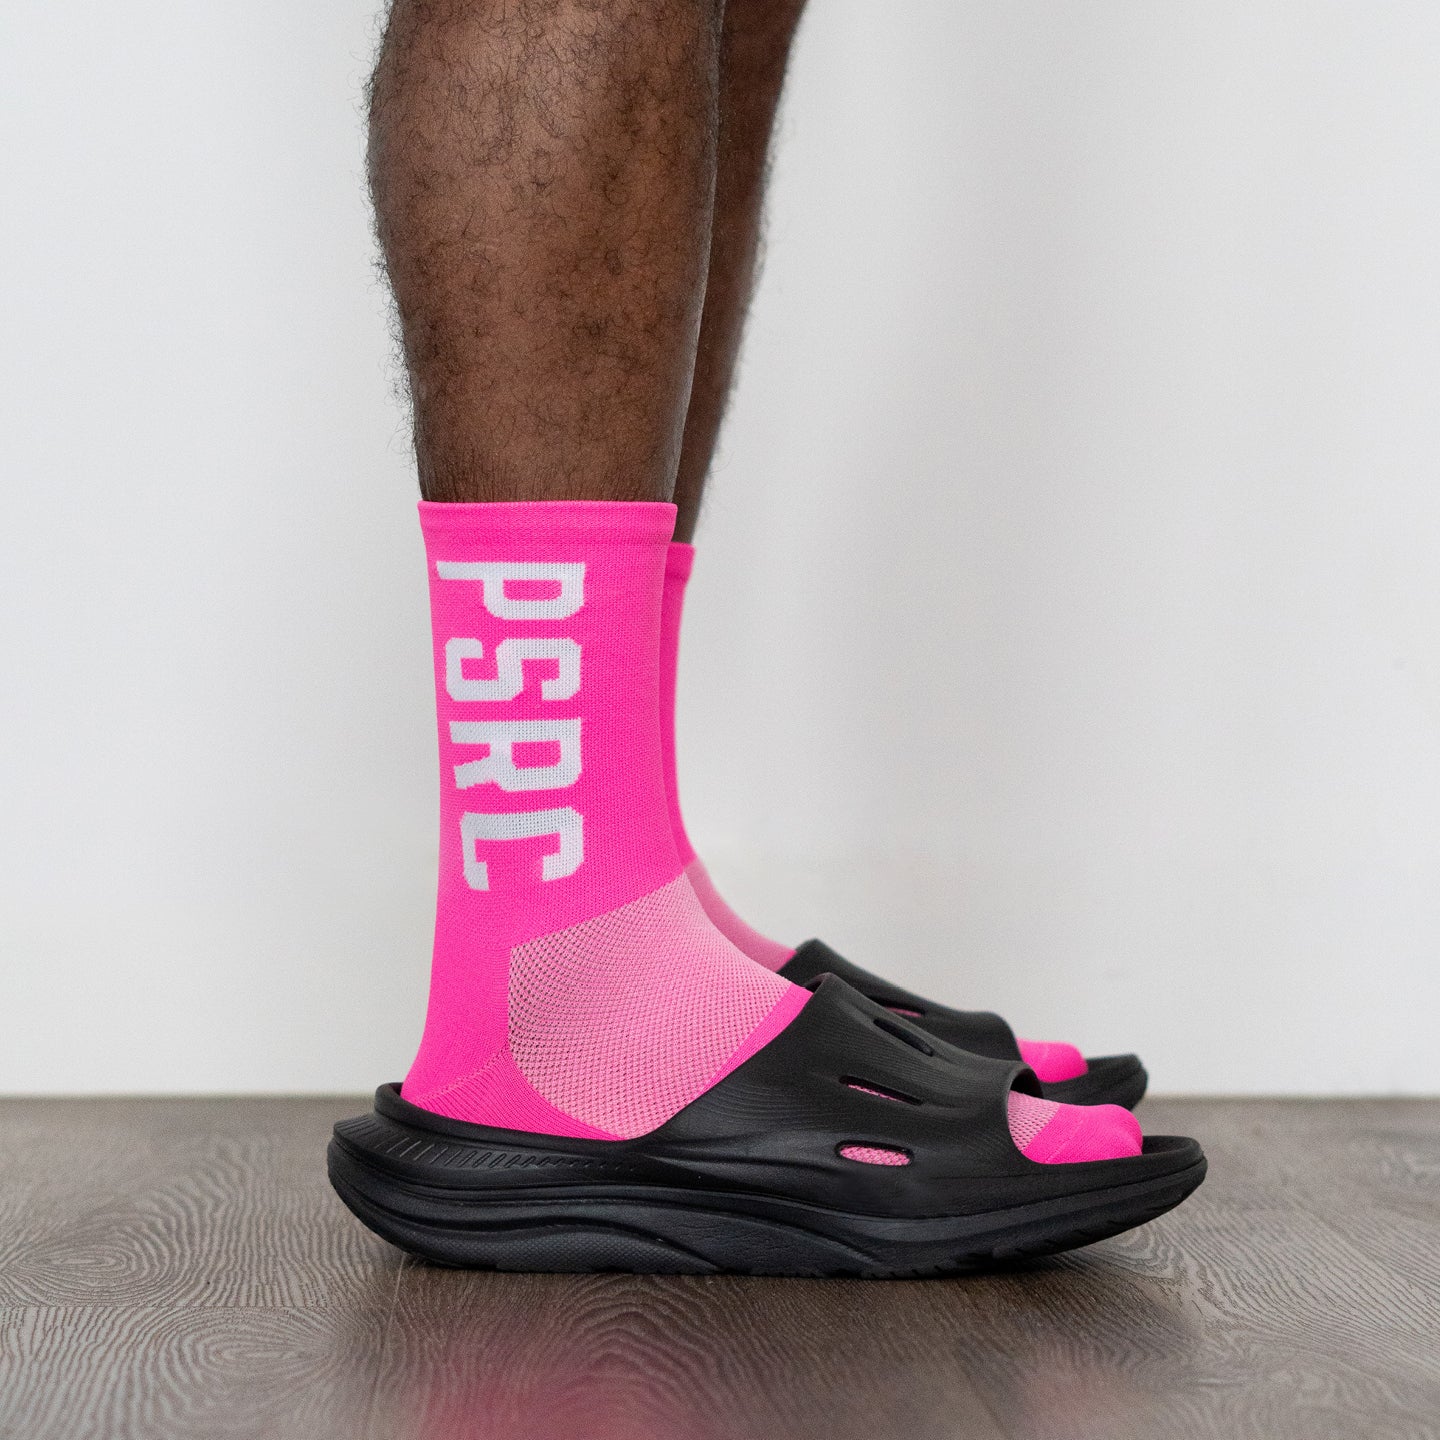 PSRC - Performance Socks - Pink with Bold White PSRC